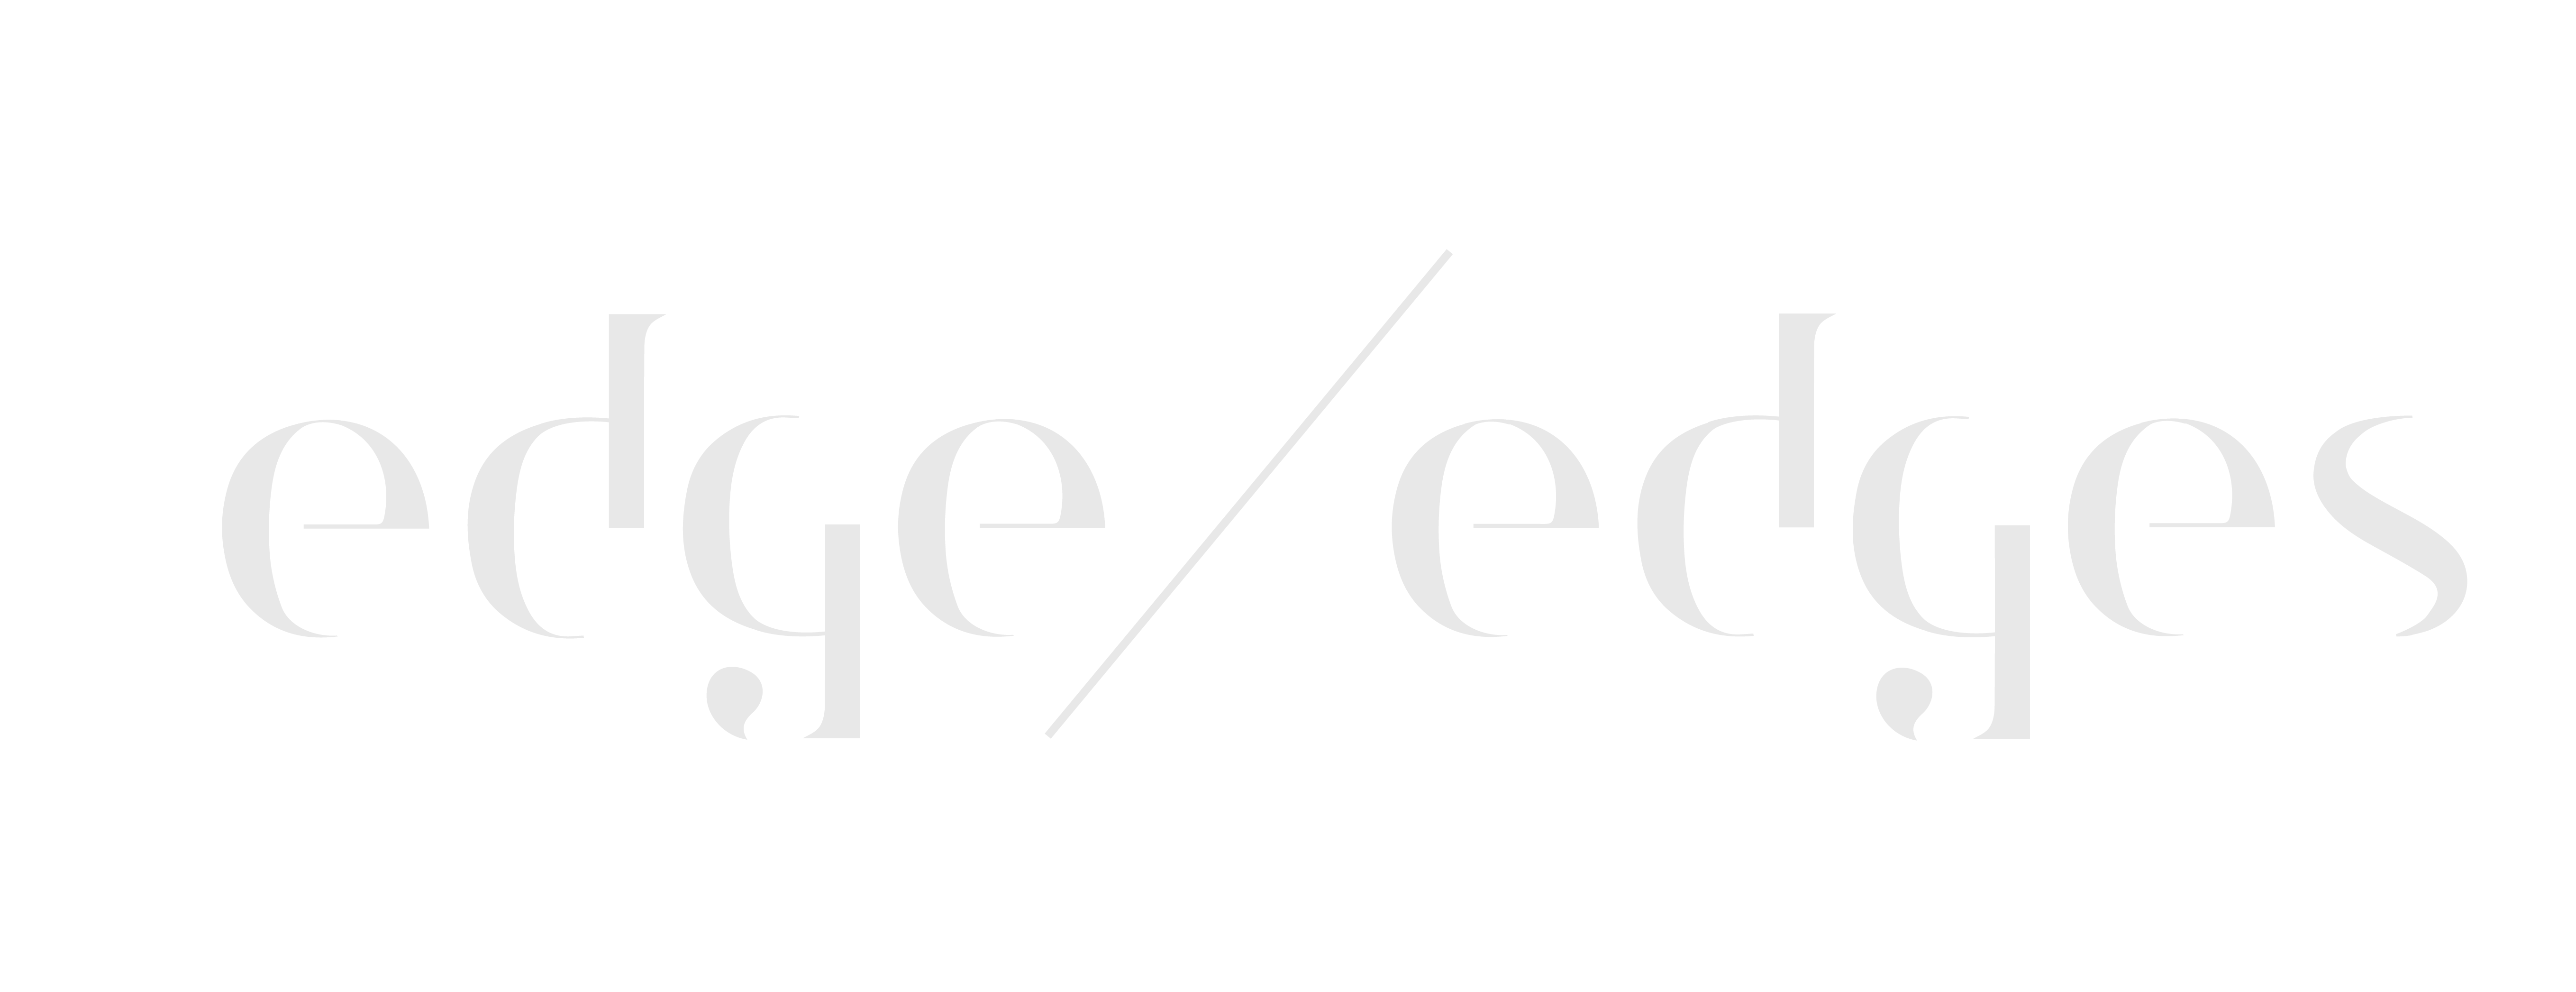 Logo 2.0 hell edgeandedges-07